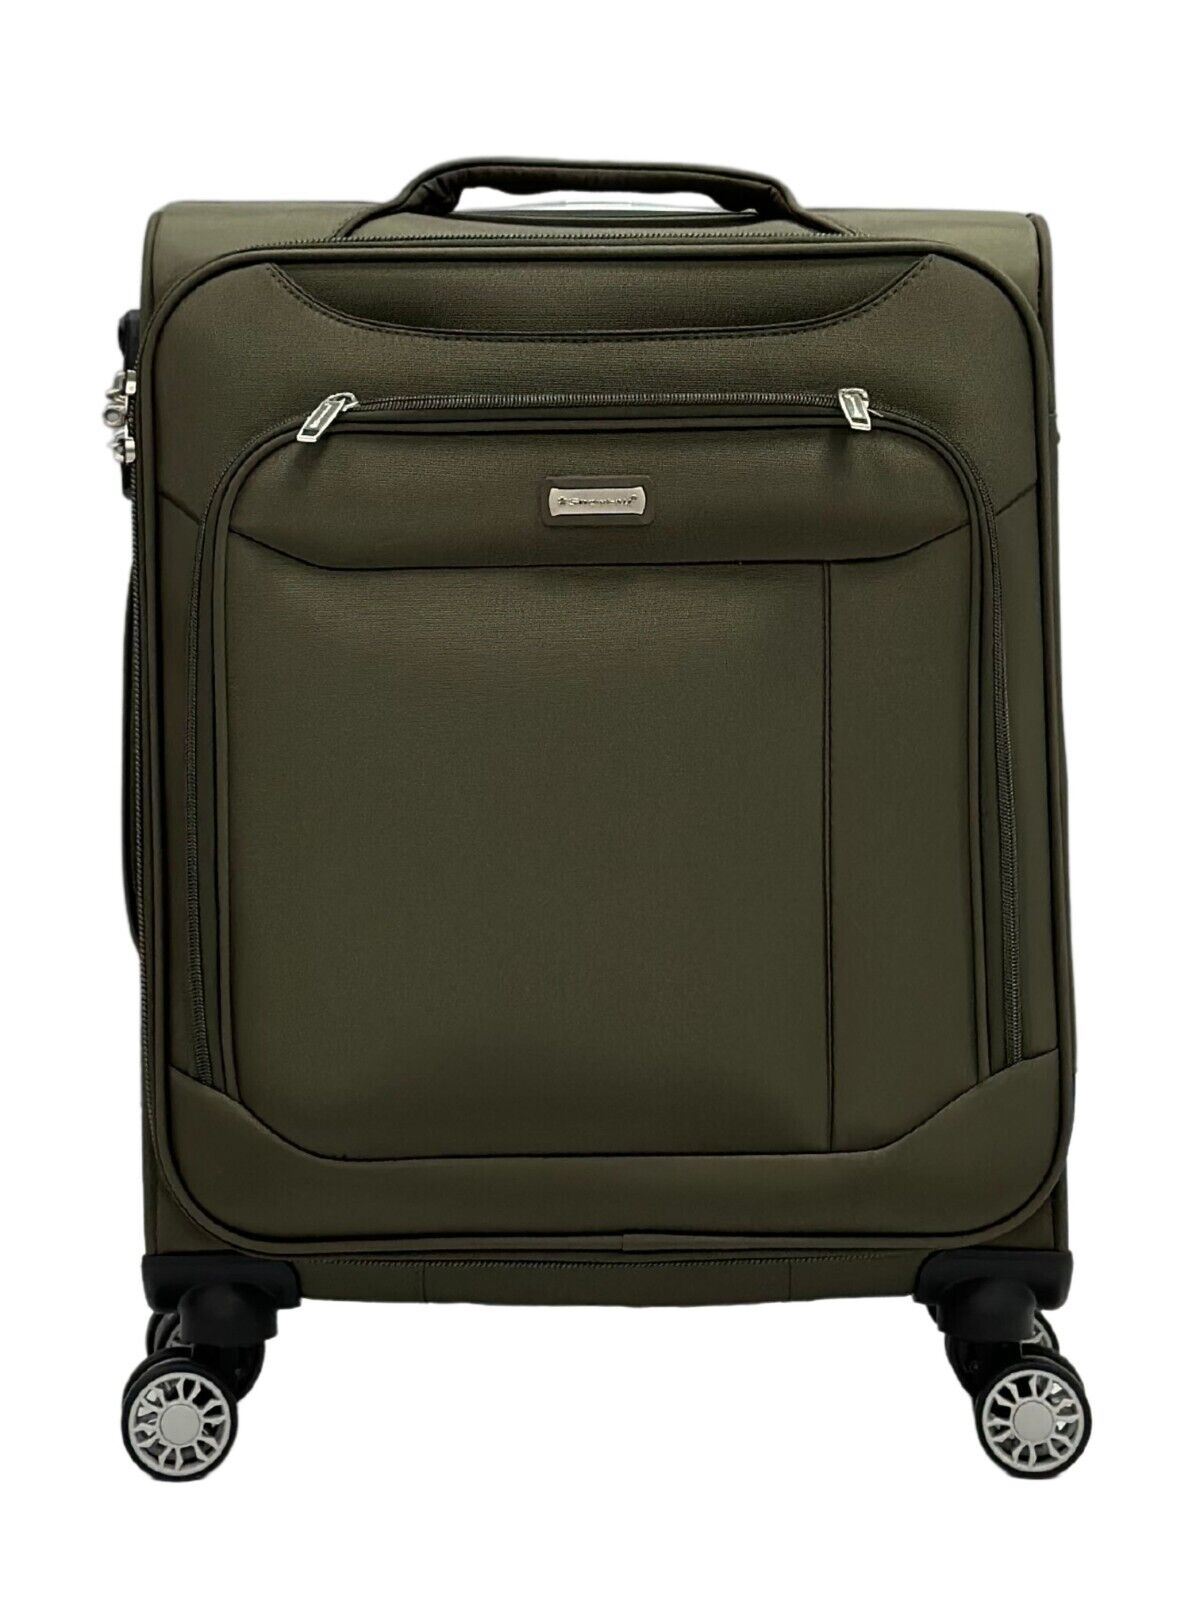 Lightweight Suitcase  4 Wheel Luggage Travel Cabin TSA Soft Bag